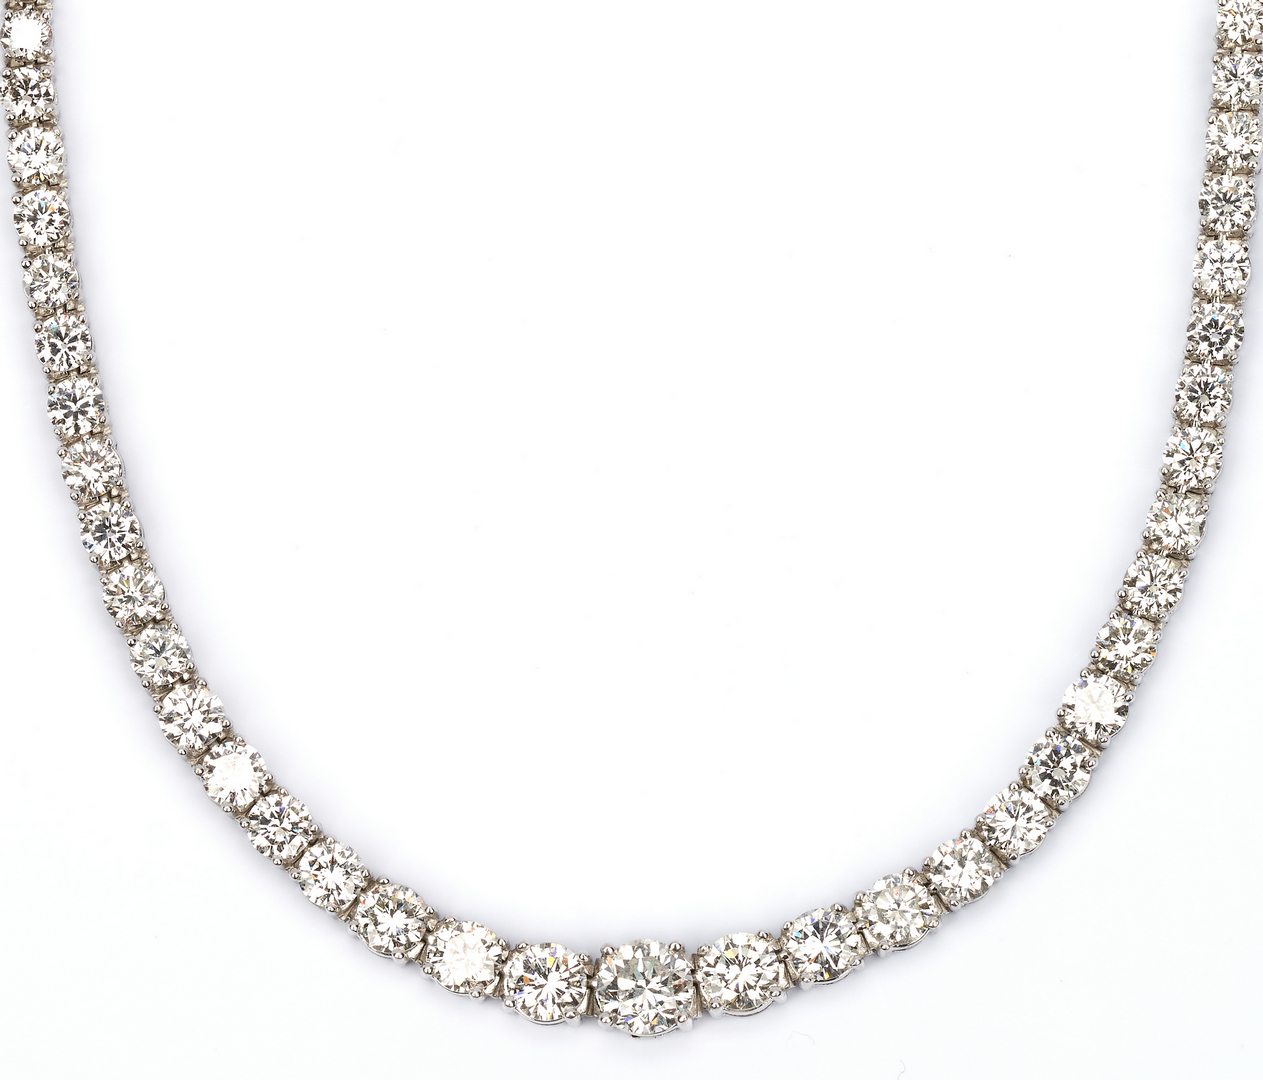 Lot 34: Diamond Eternity Necklace, approx. 22 Carats